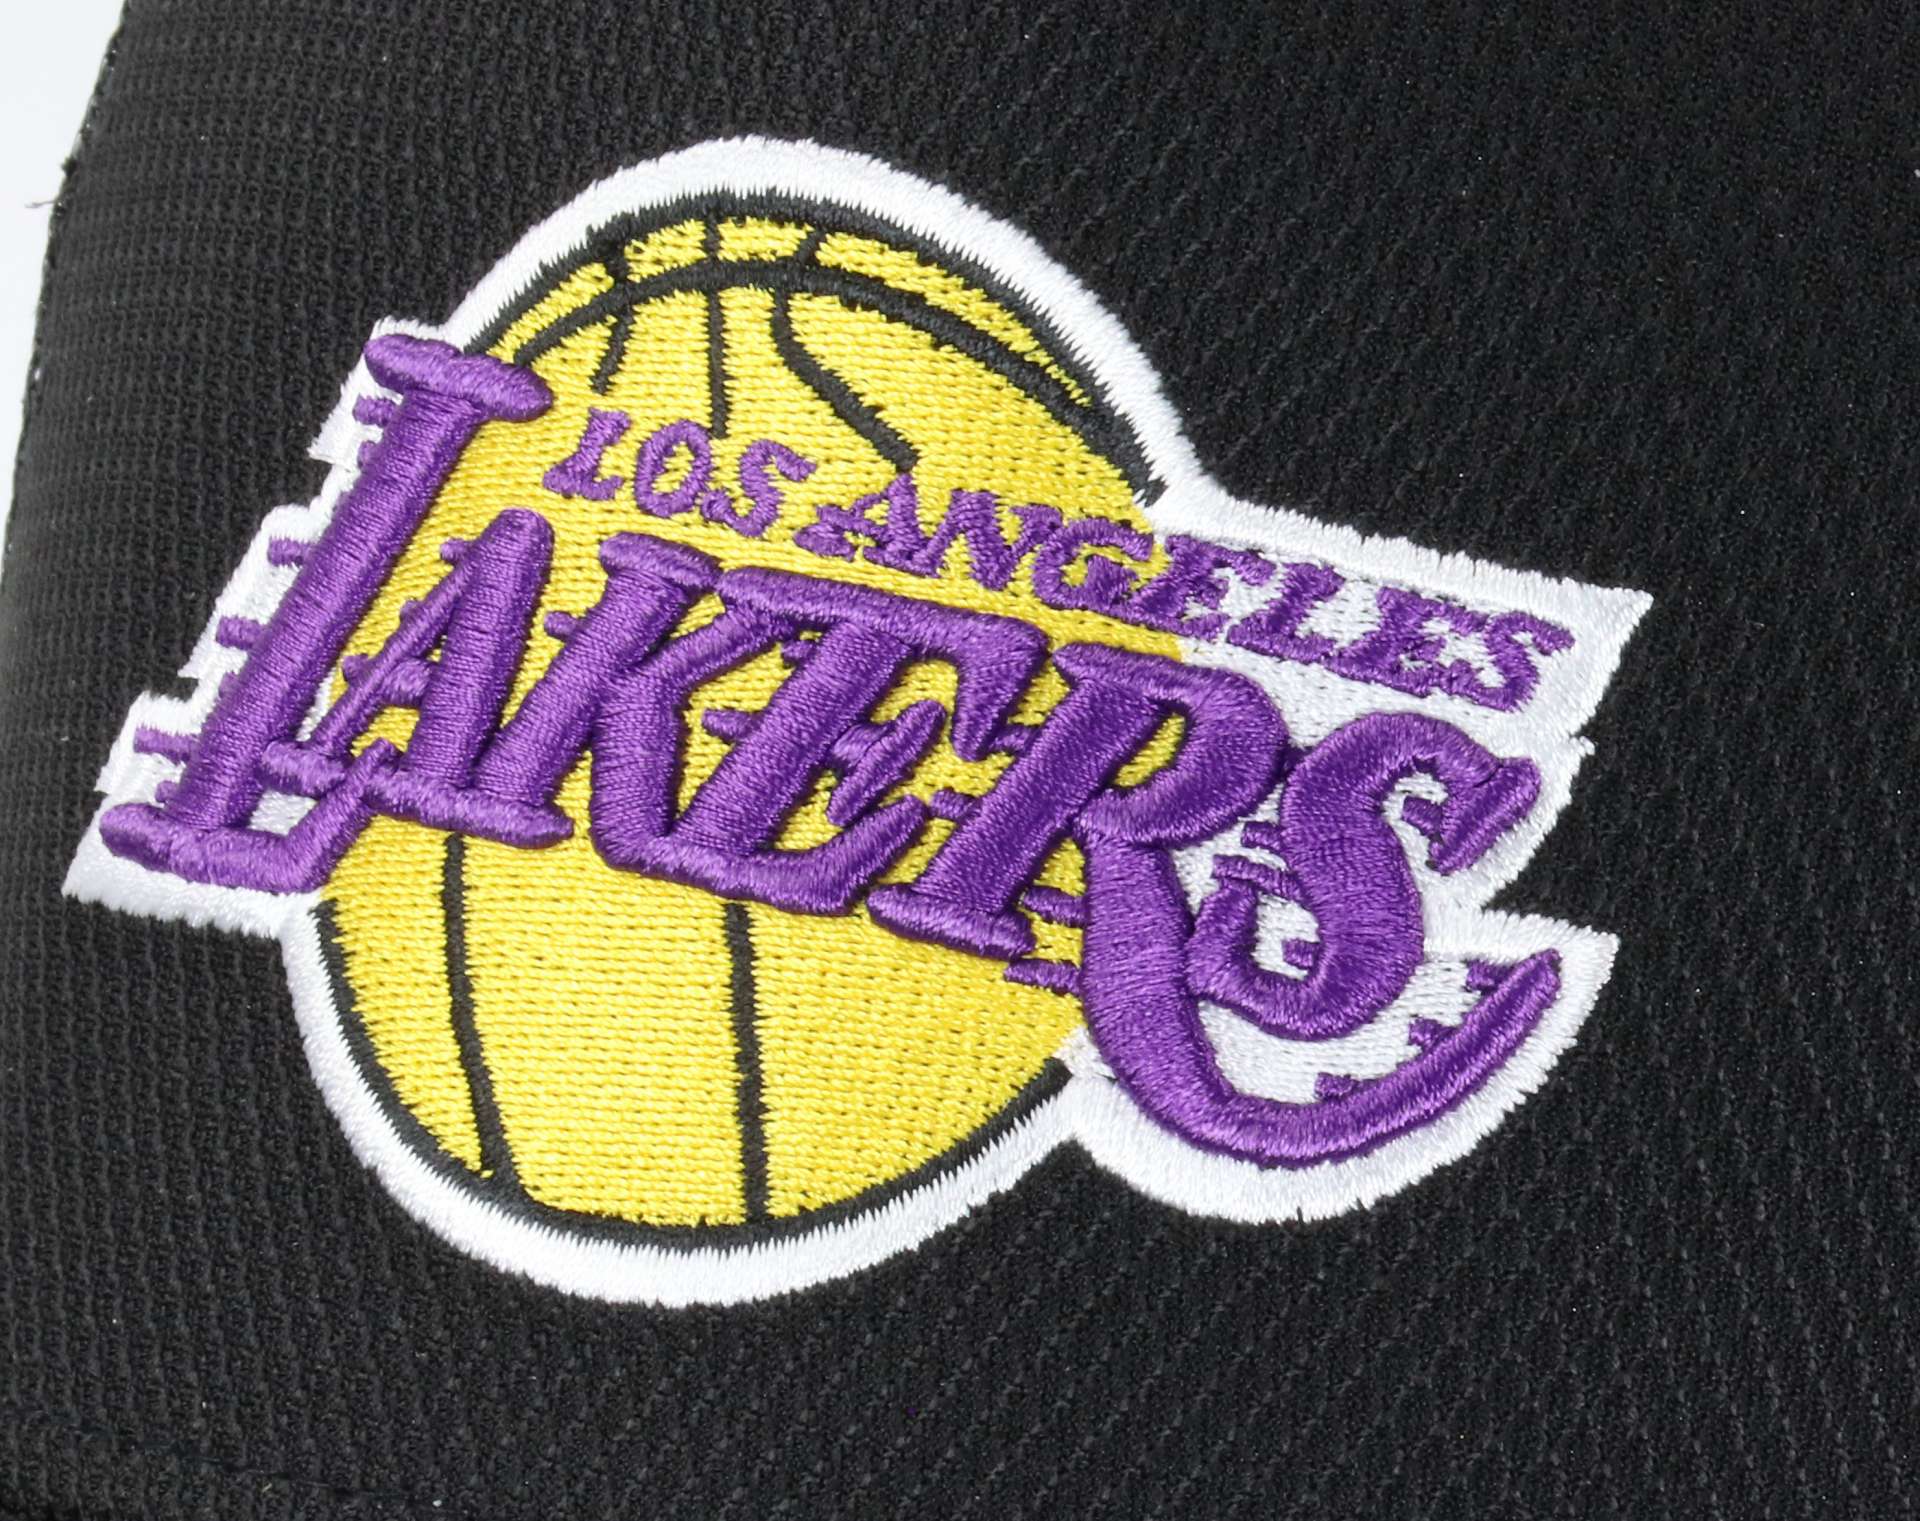 Los Angeles Lakers Black NBA Black Base A-Frame Adjustable Trucker Cap New Era